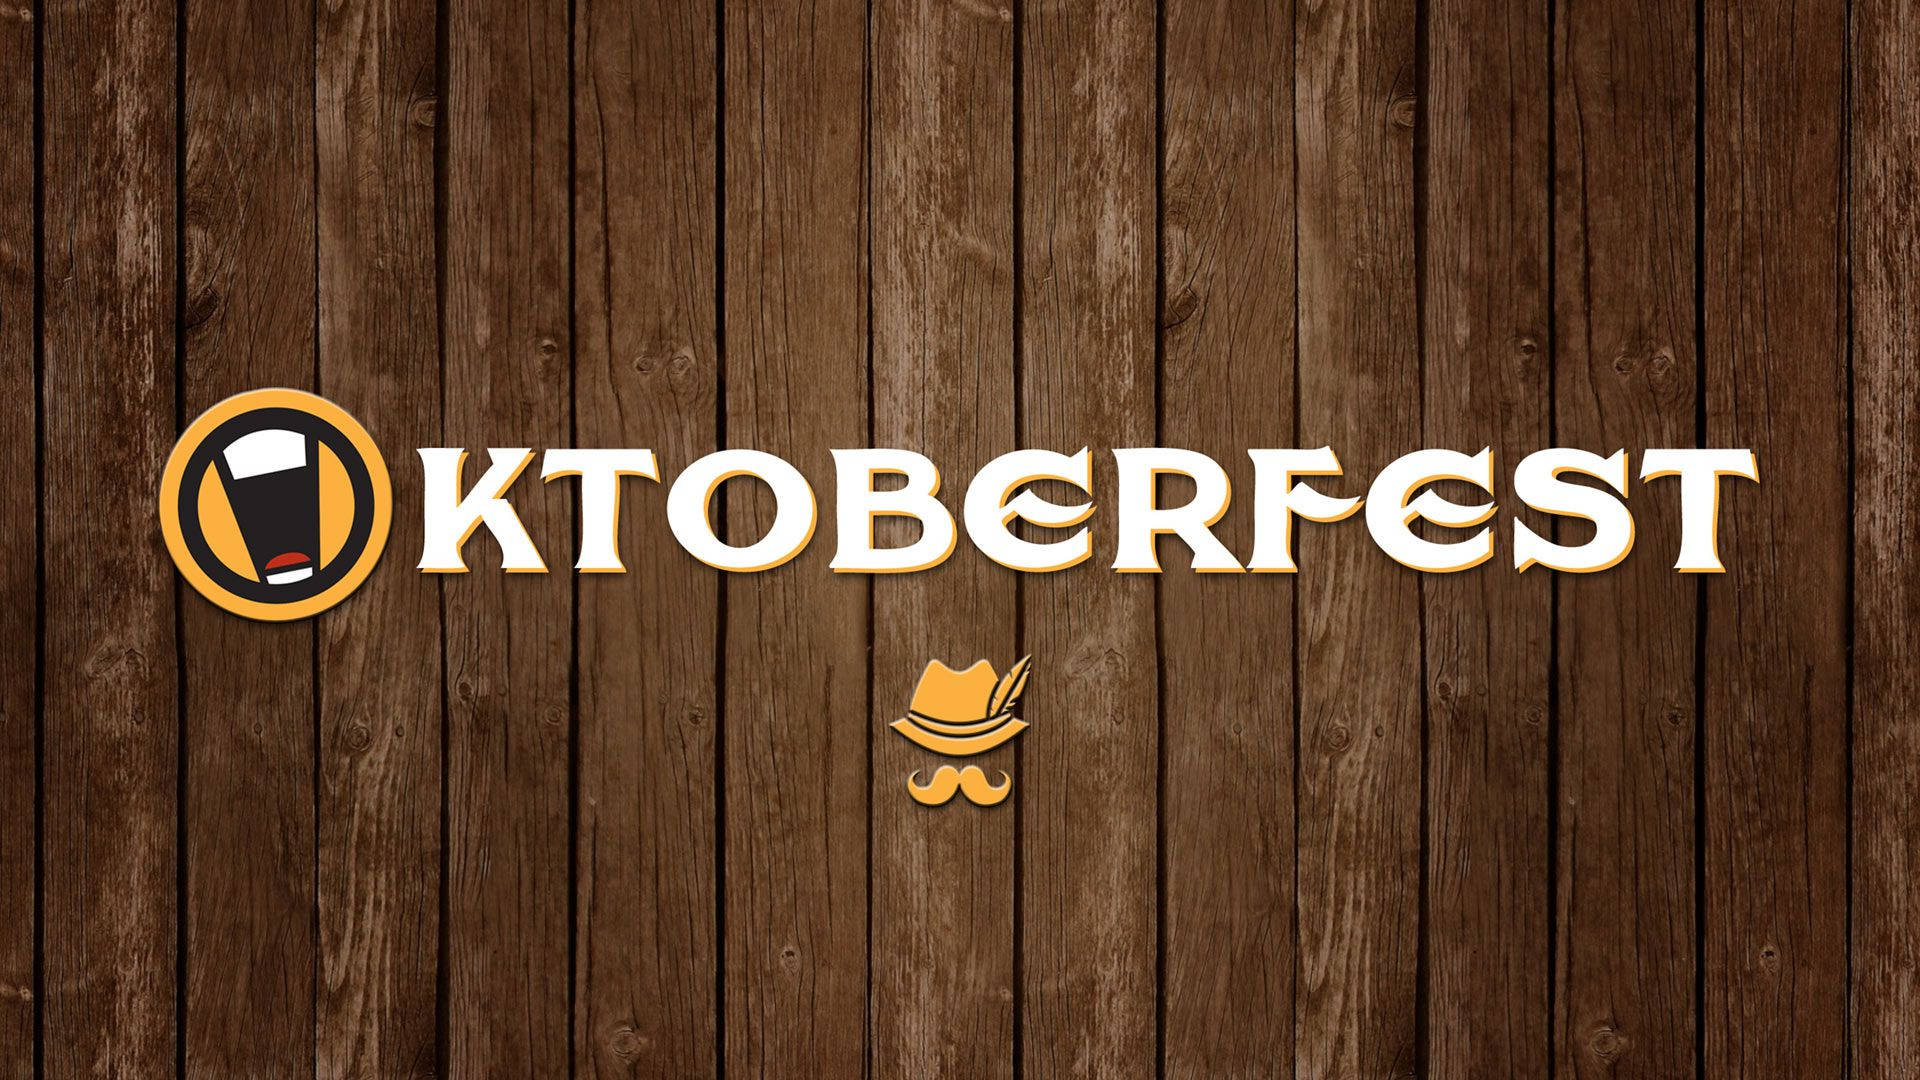 Classic Oktoberfest Banner